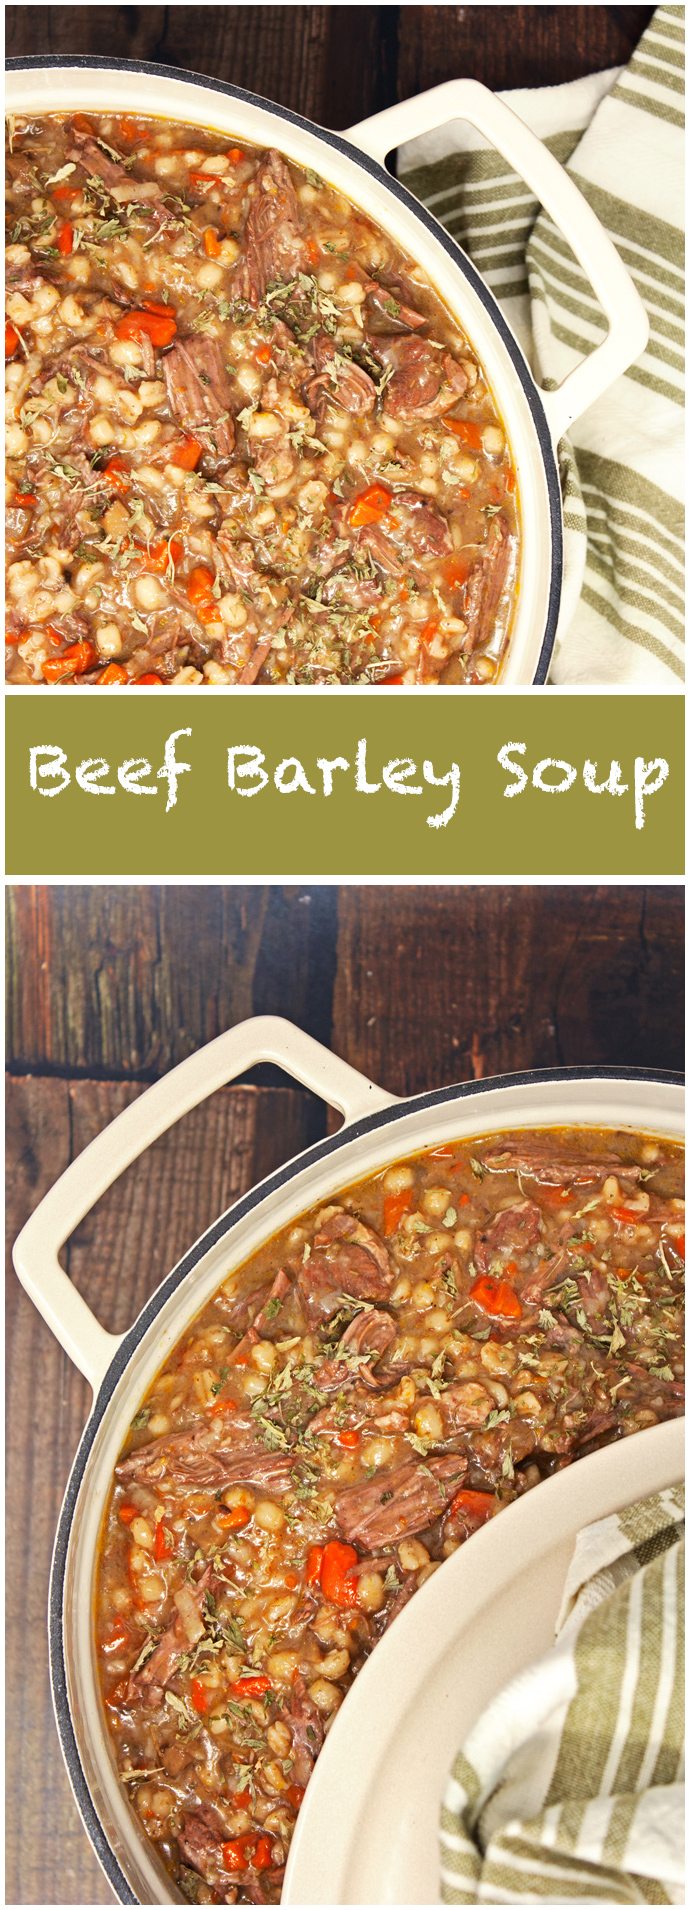 Beef Barley Soup - 2teaspoons